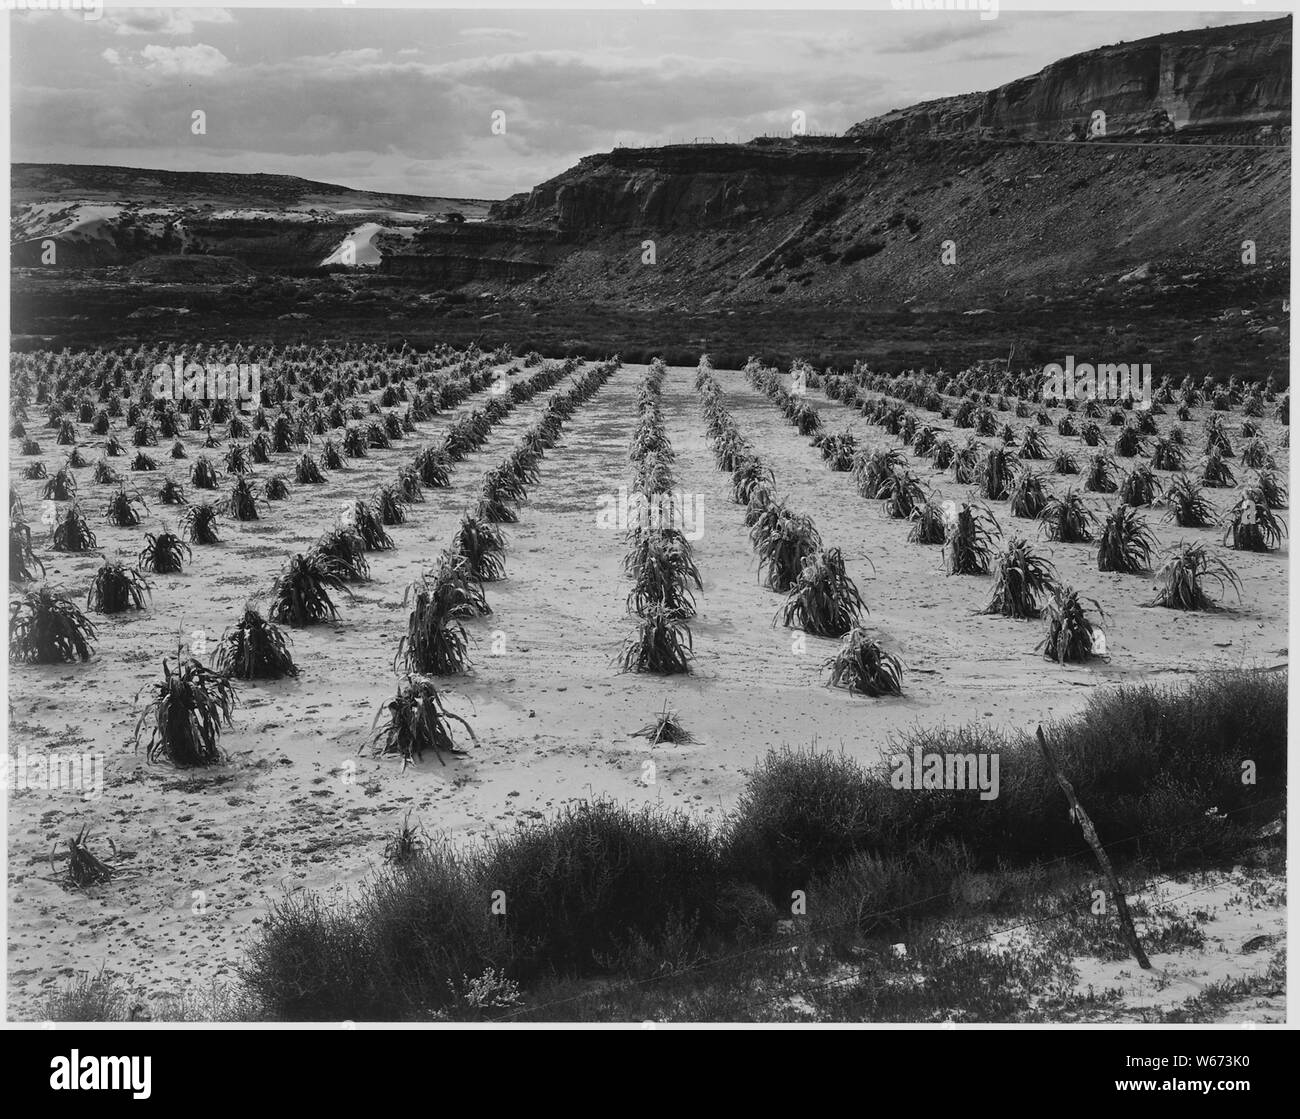 Looking across rows of corn, cliff in background, Corn Field, Indian Farm near Tuba City, Arizona, in Rain, 1941., 1941 Stock Photo